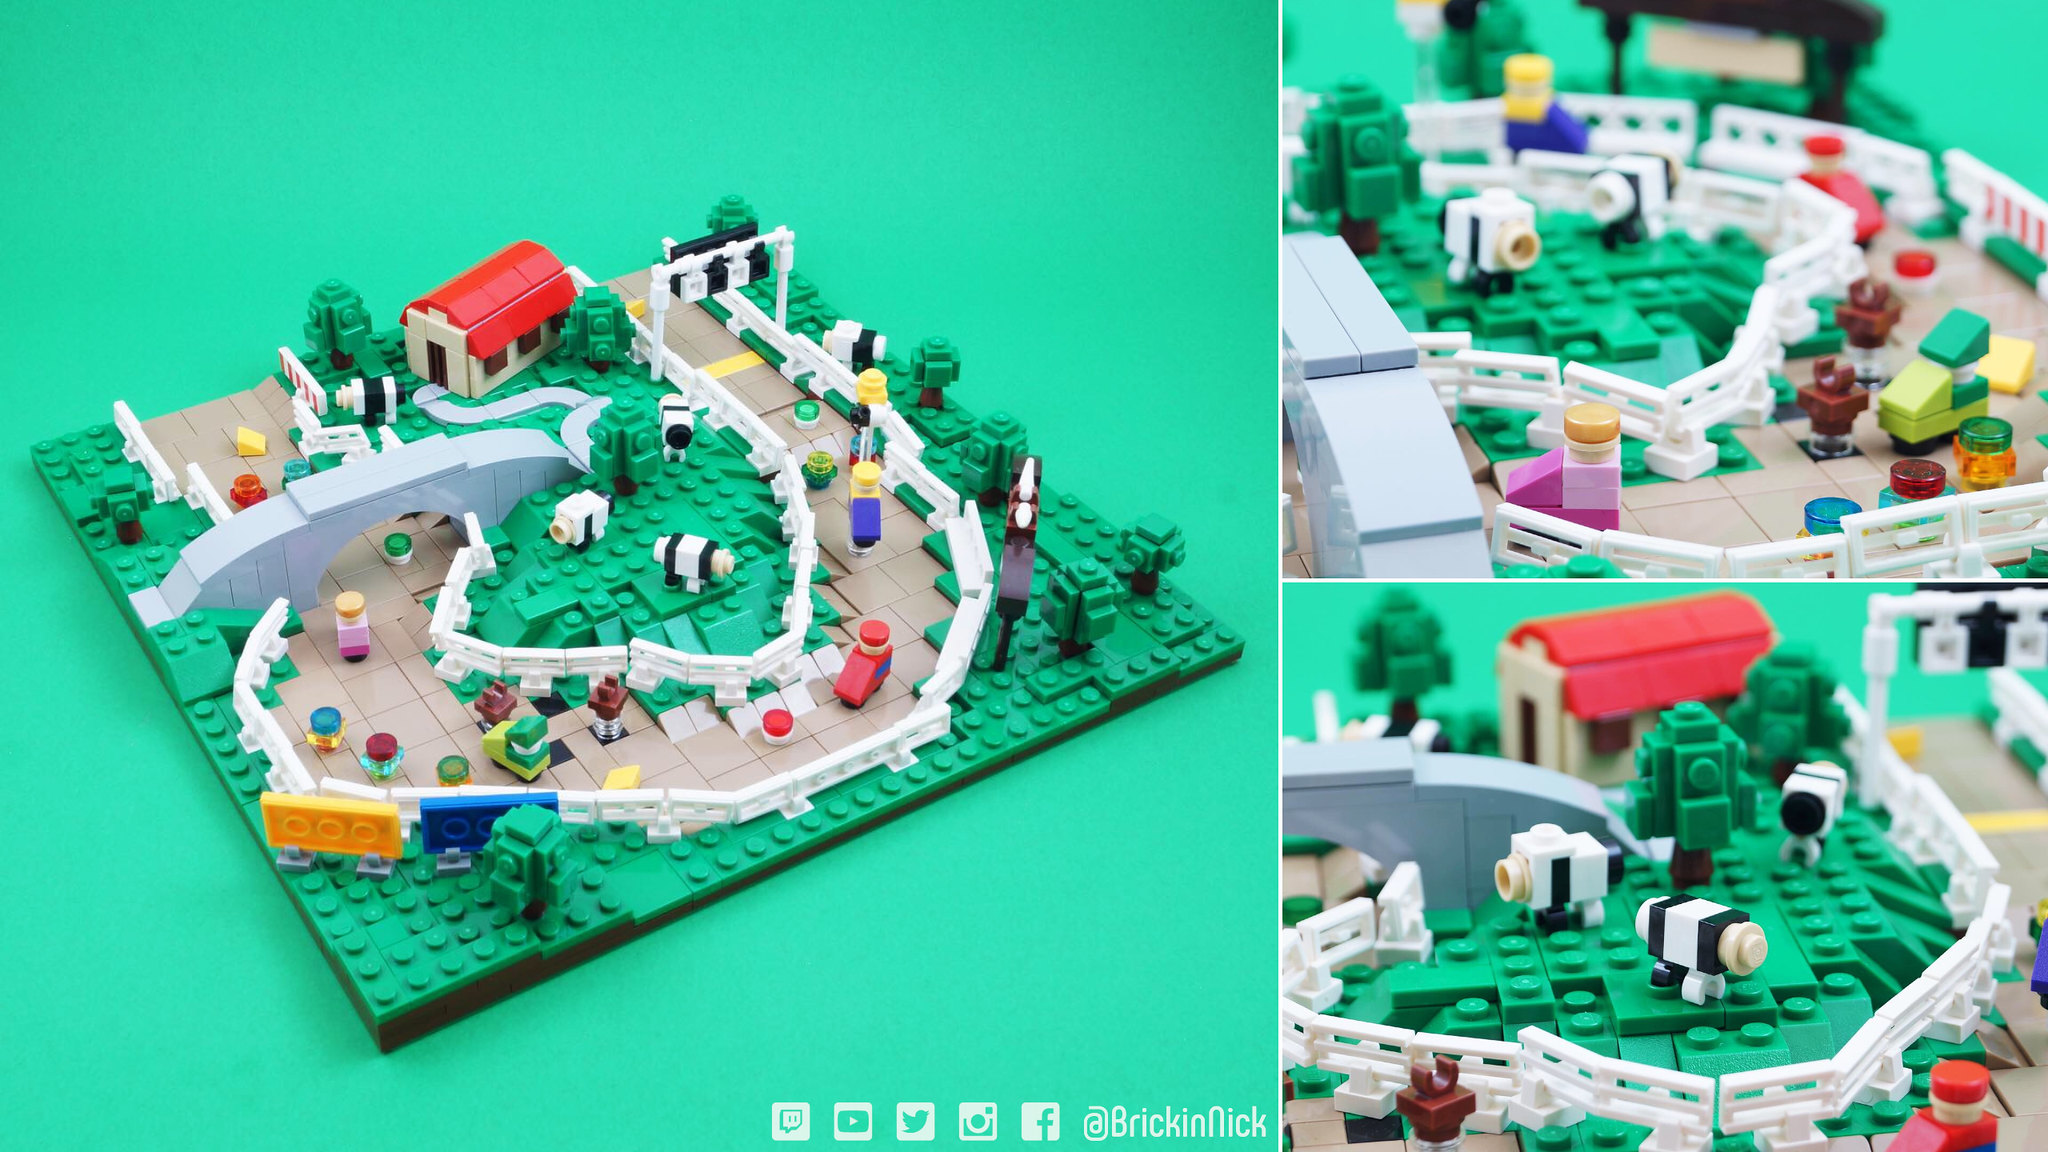 Mario Kart - BrickNerd - All things LEGO and the LEGO fan community